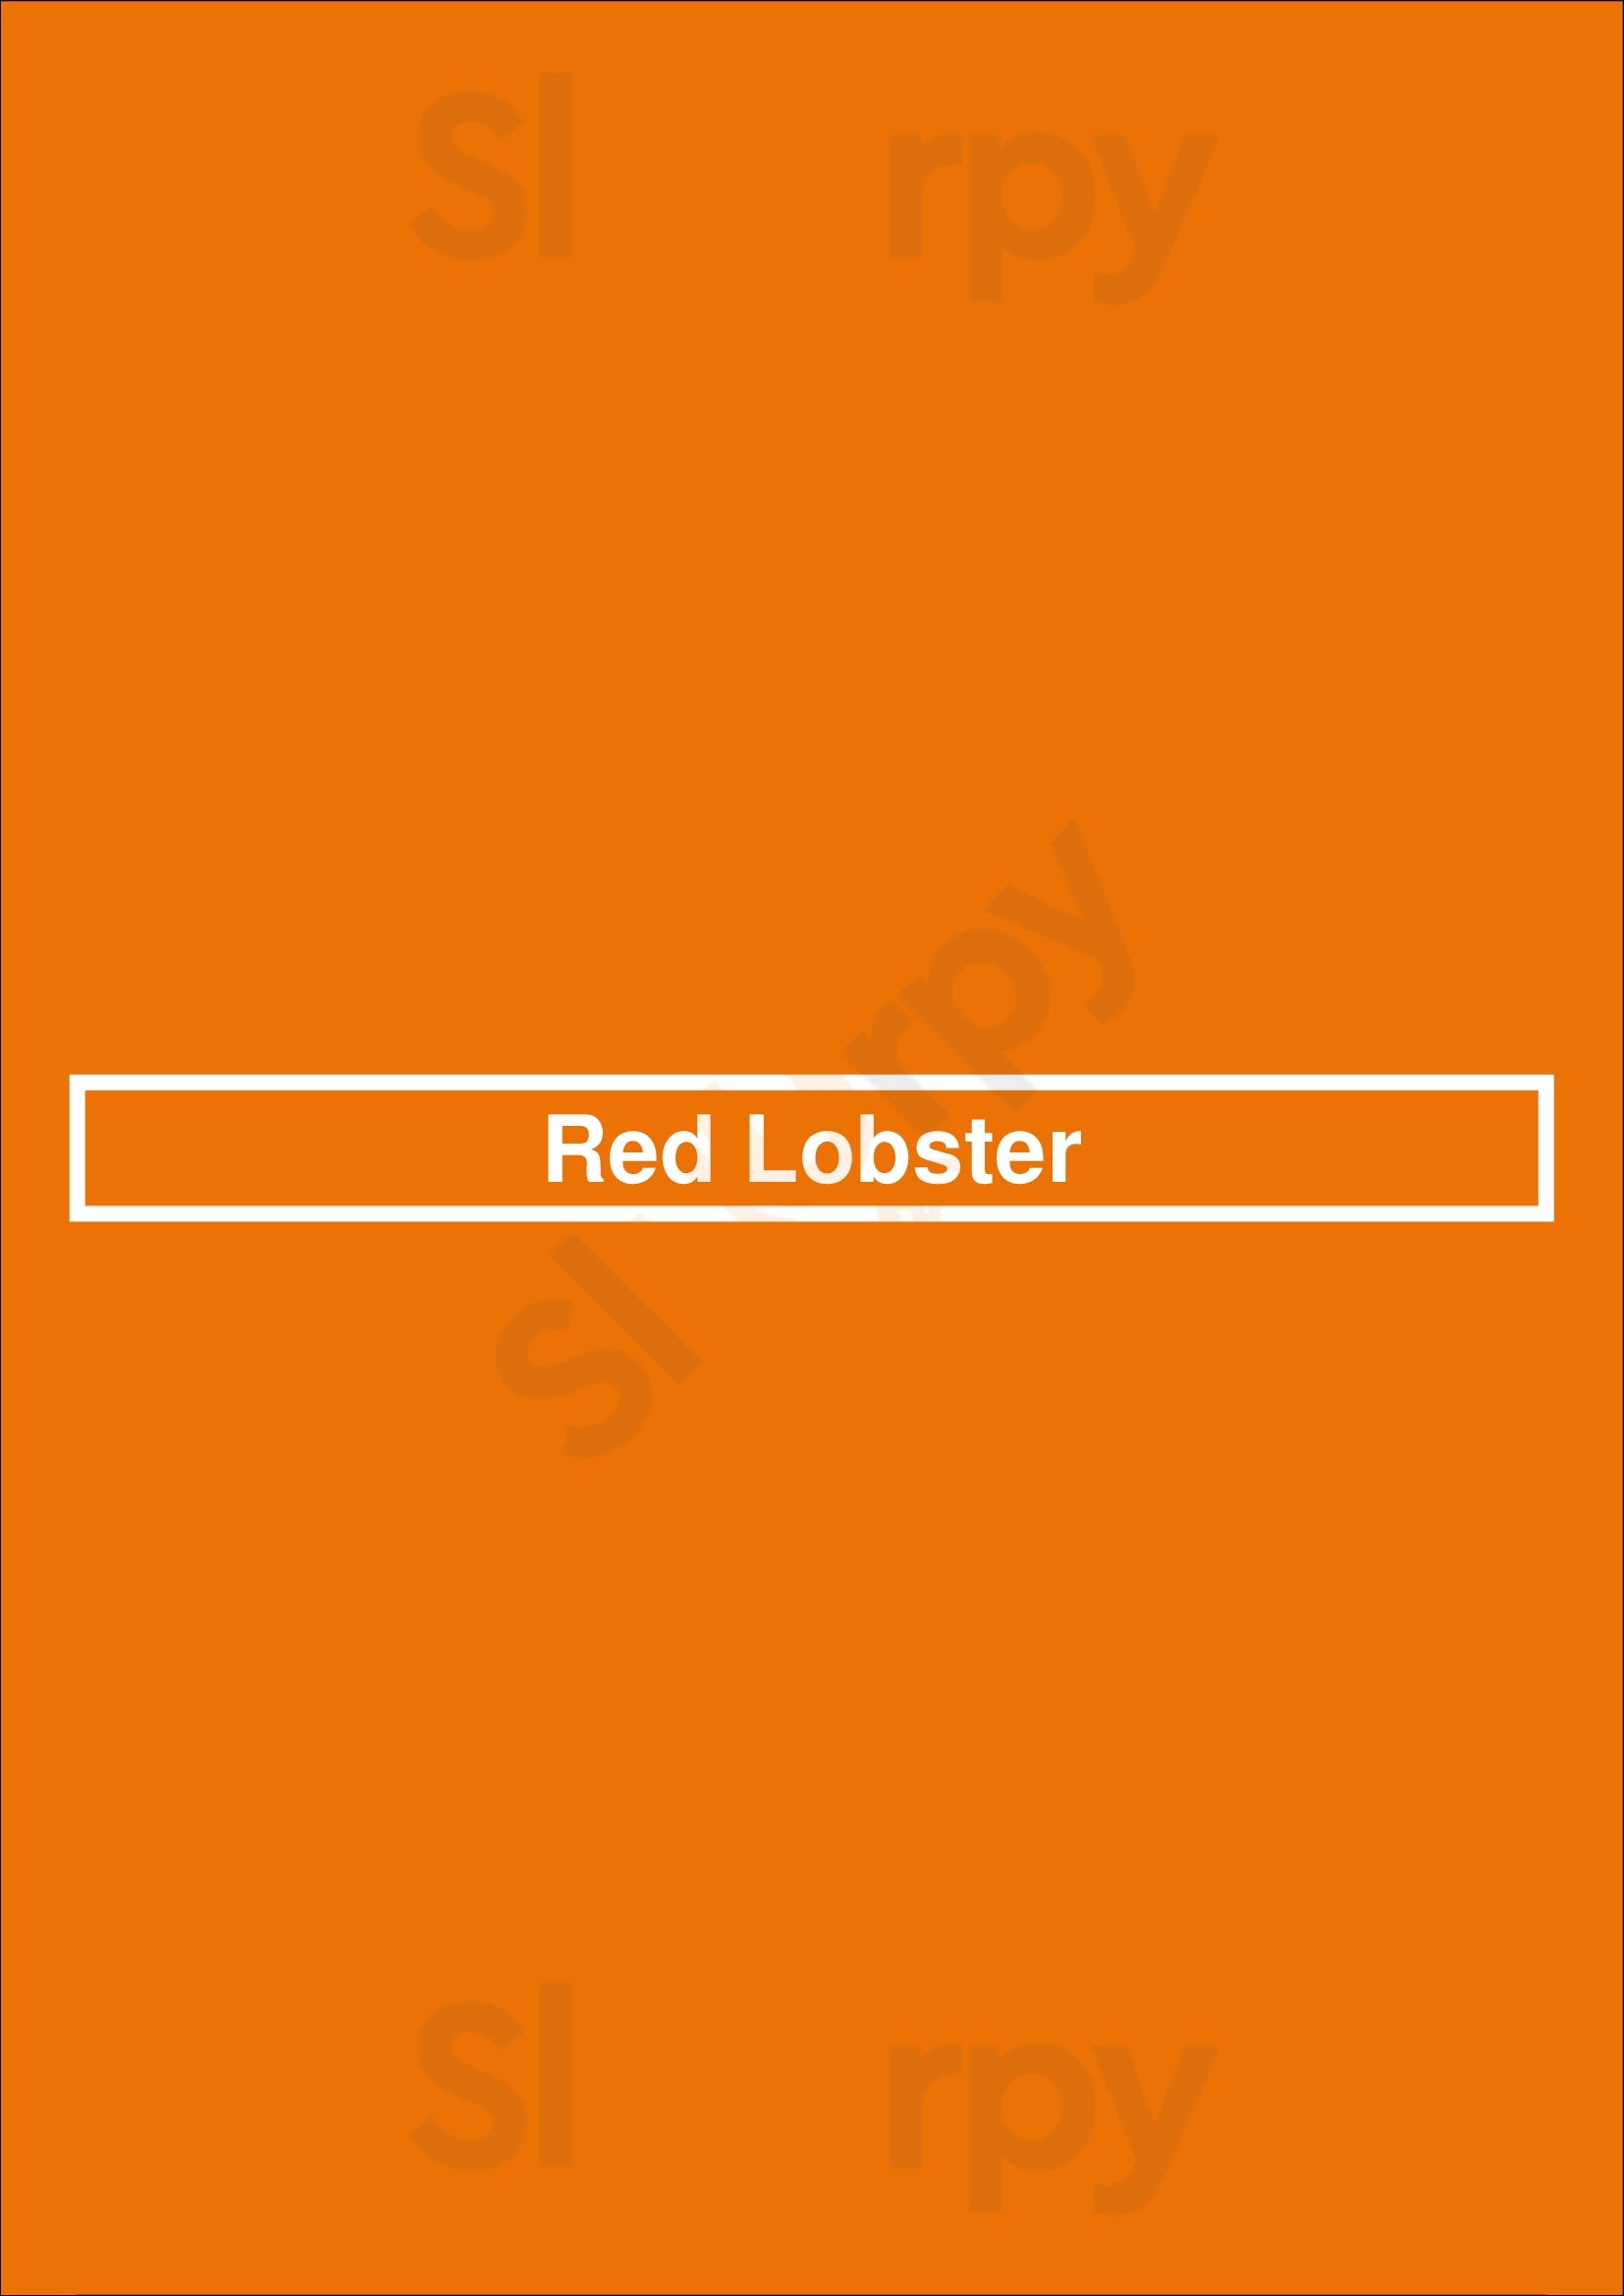 Red Lobster Sandusky Menu - 1